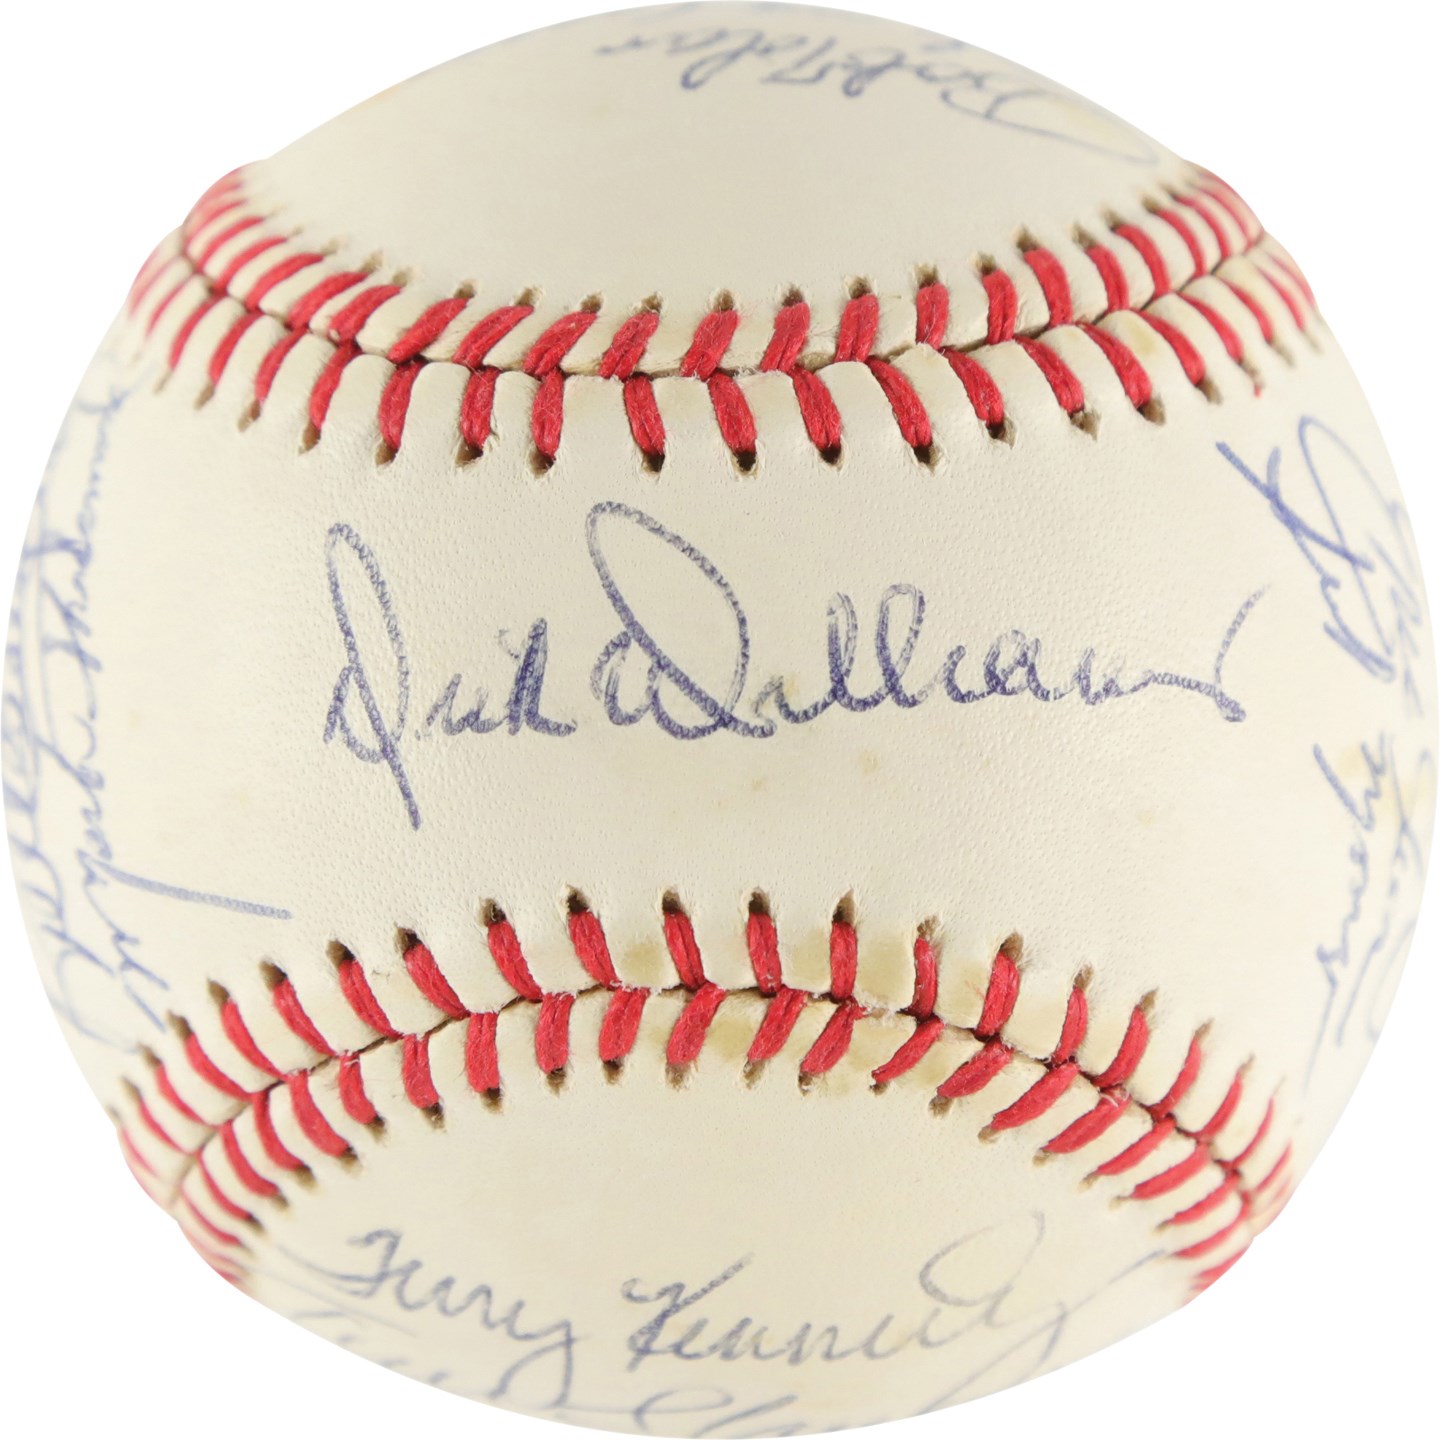 Baseball Autographs - 1983 San Diego Padres Team-Signed Baseball w/Early Tony Gwynn Signature